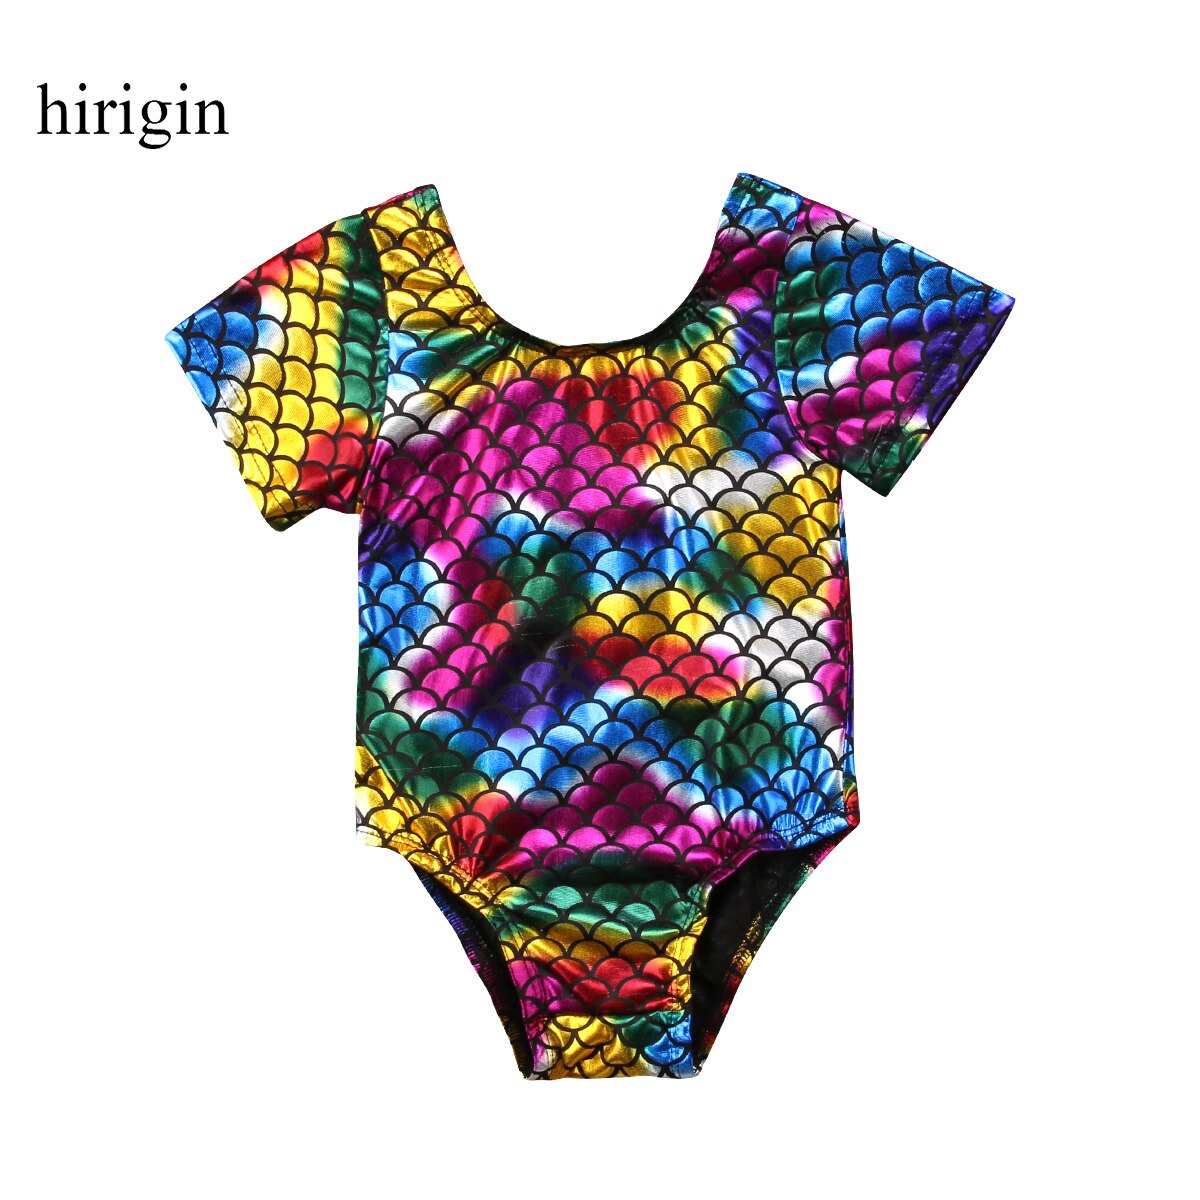 Hirigin baby pige badetøj tema havfrue baby børn badedragt havprinsesse skala baby badedragt strandtøj: Fisk skala / 0 to 6 m